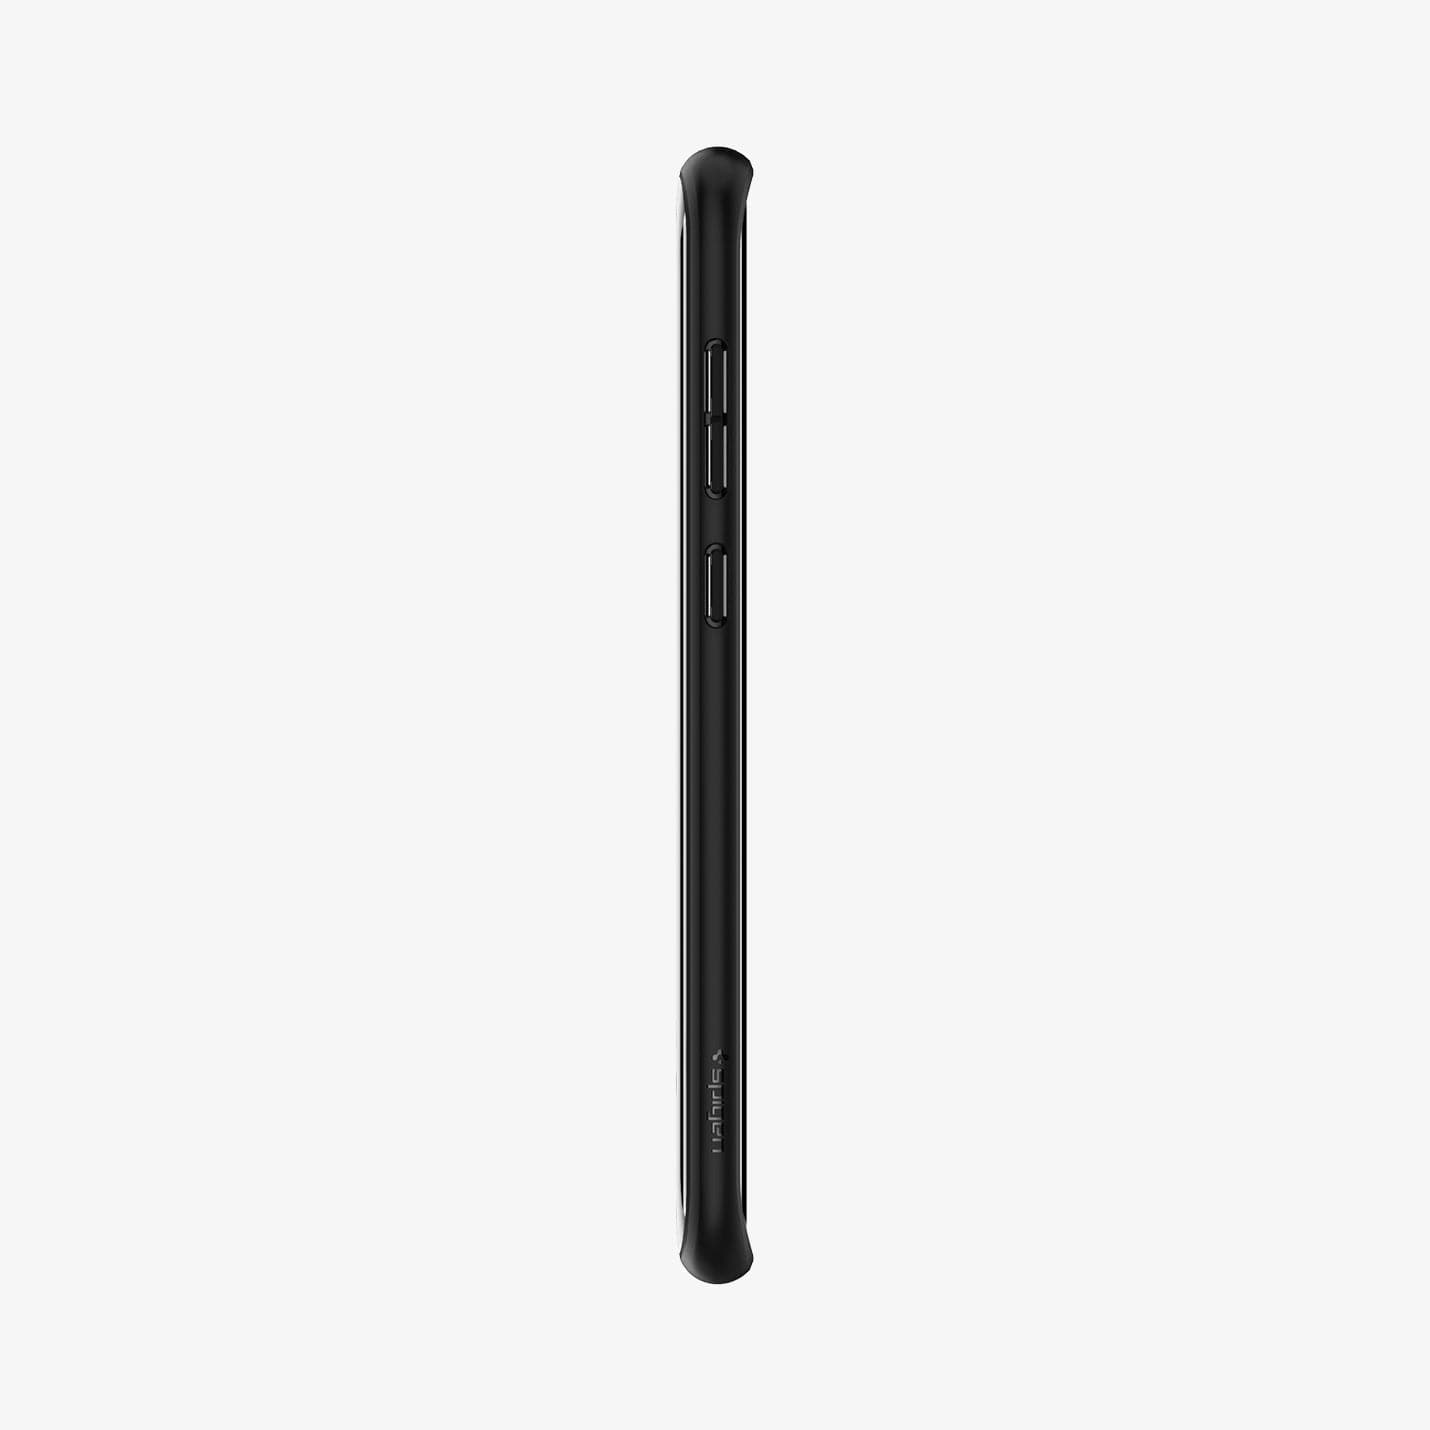 565CS21628 - Galaxy S8 Series Ultra Hybrid Case in matte black showing the side